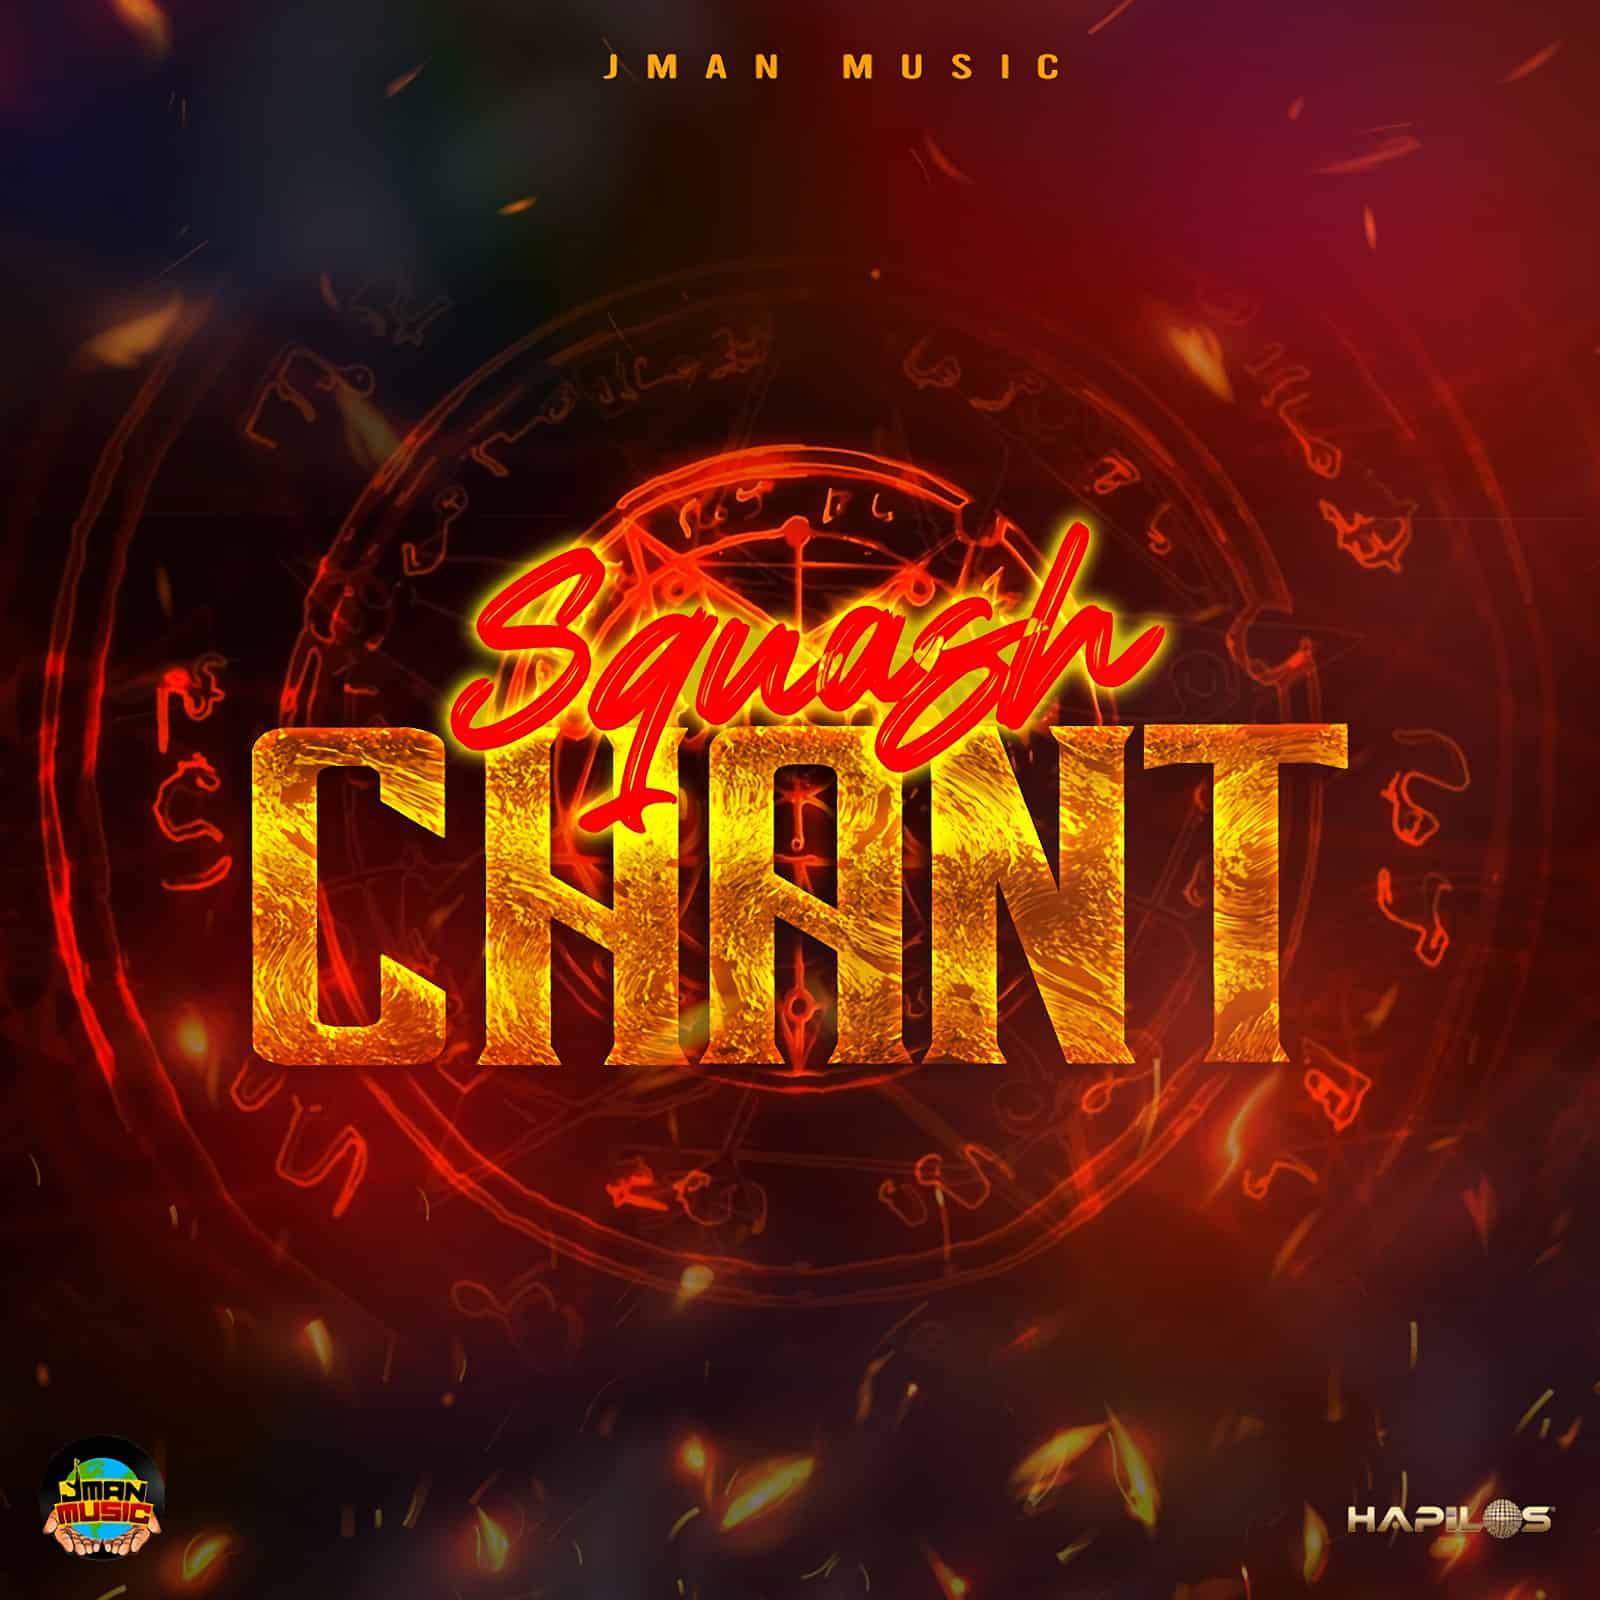 Squash - Chant - Jman Music